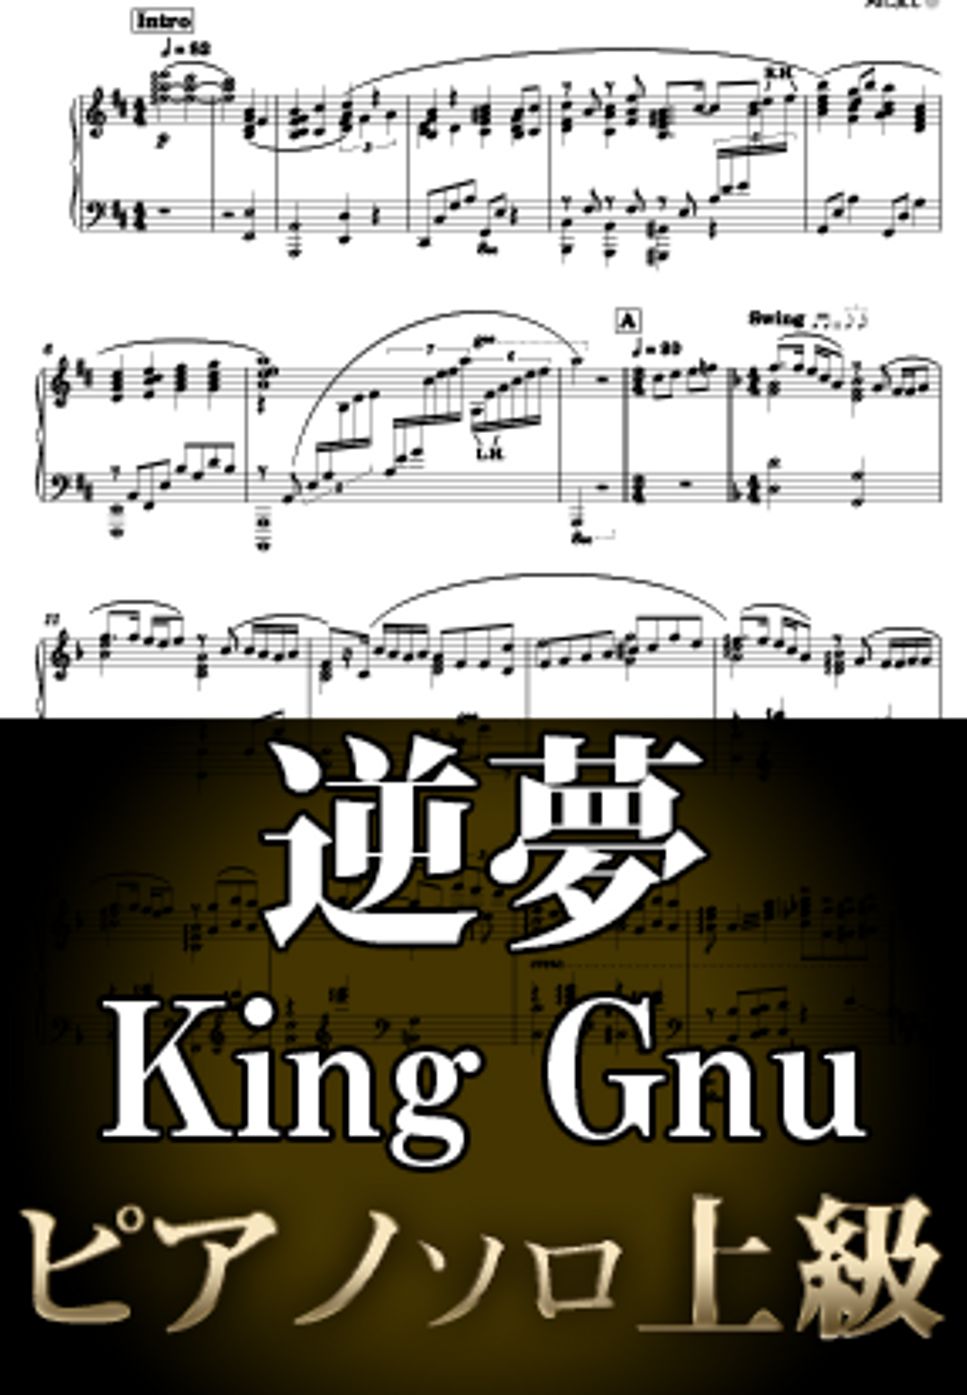 King Gnu - 逆夢 (ピアノソロ上級  / 劇場版アニメ『呪術廻戦 0』主題歌) by Suu